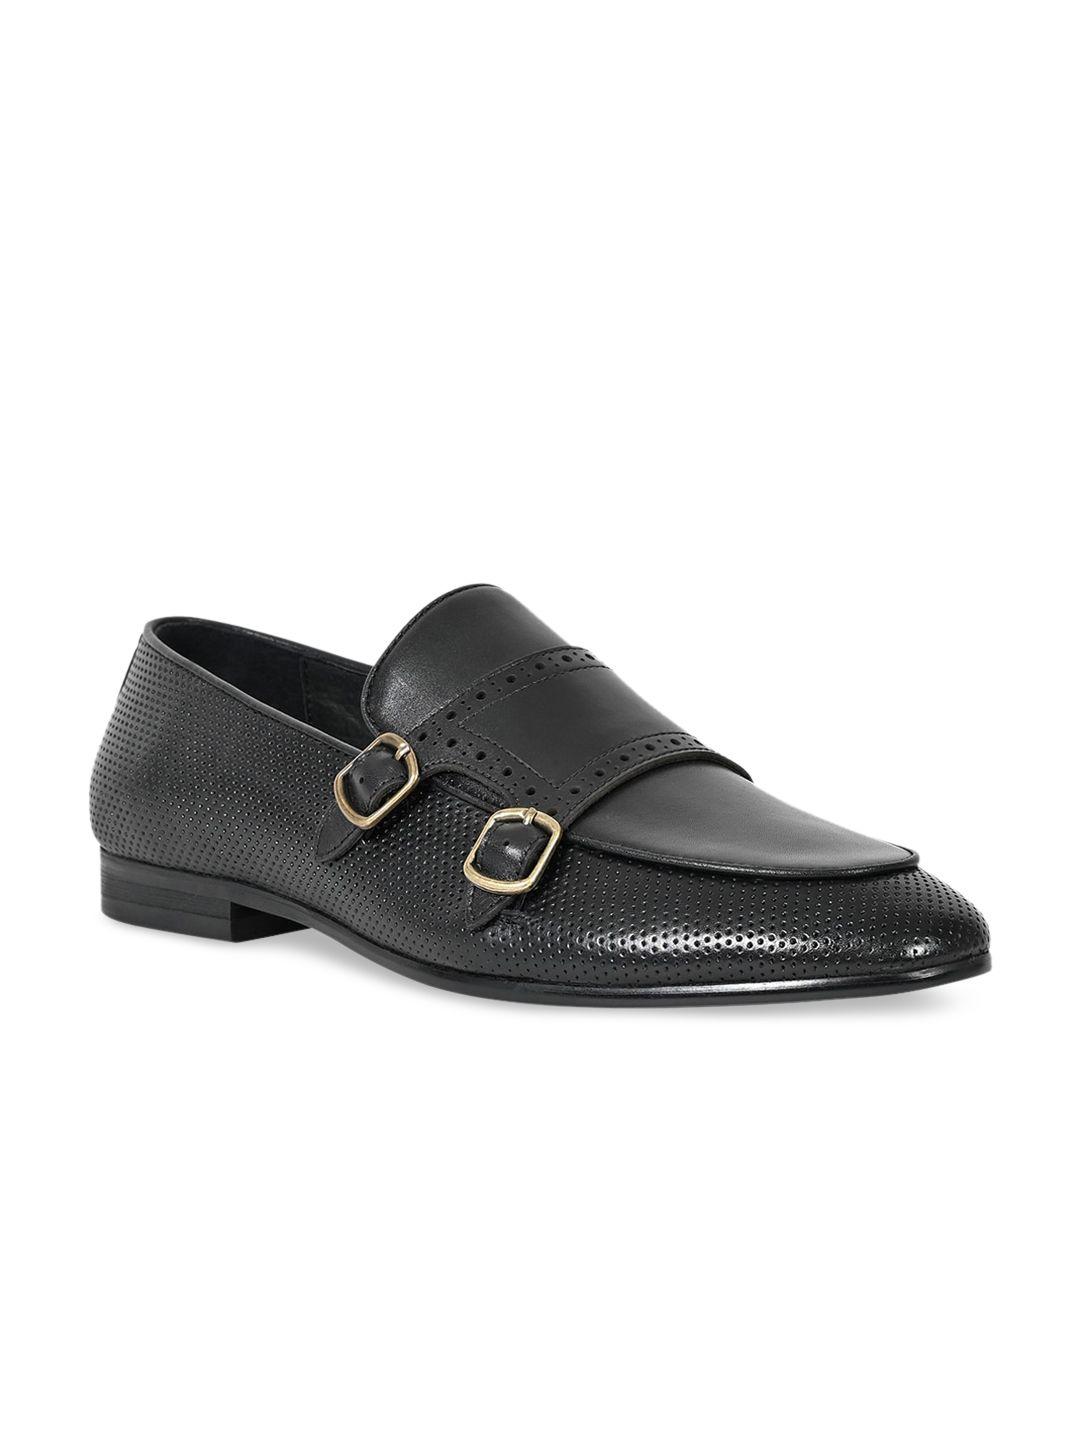 cobblerz men black solid leather formal monk shoes